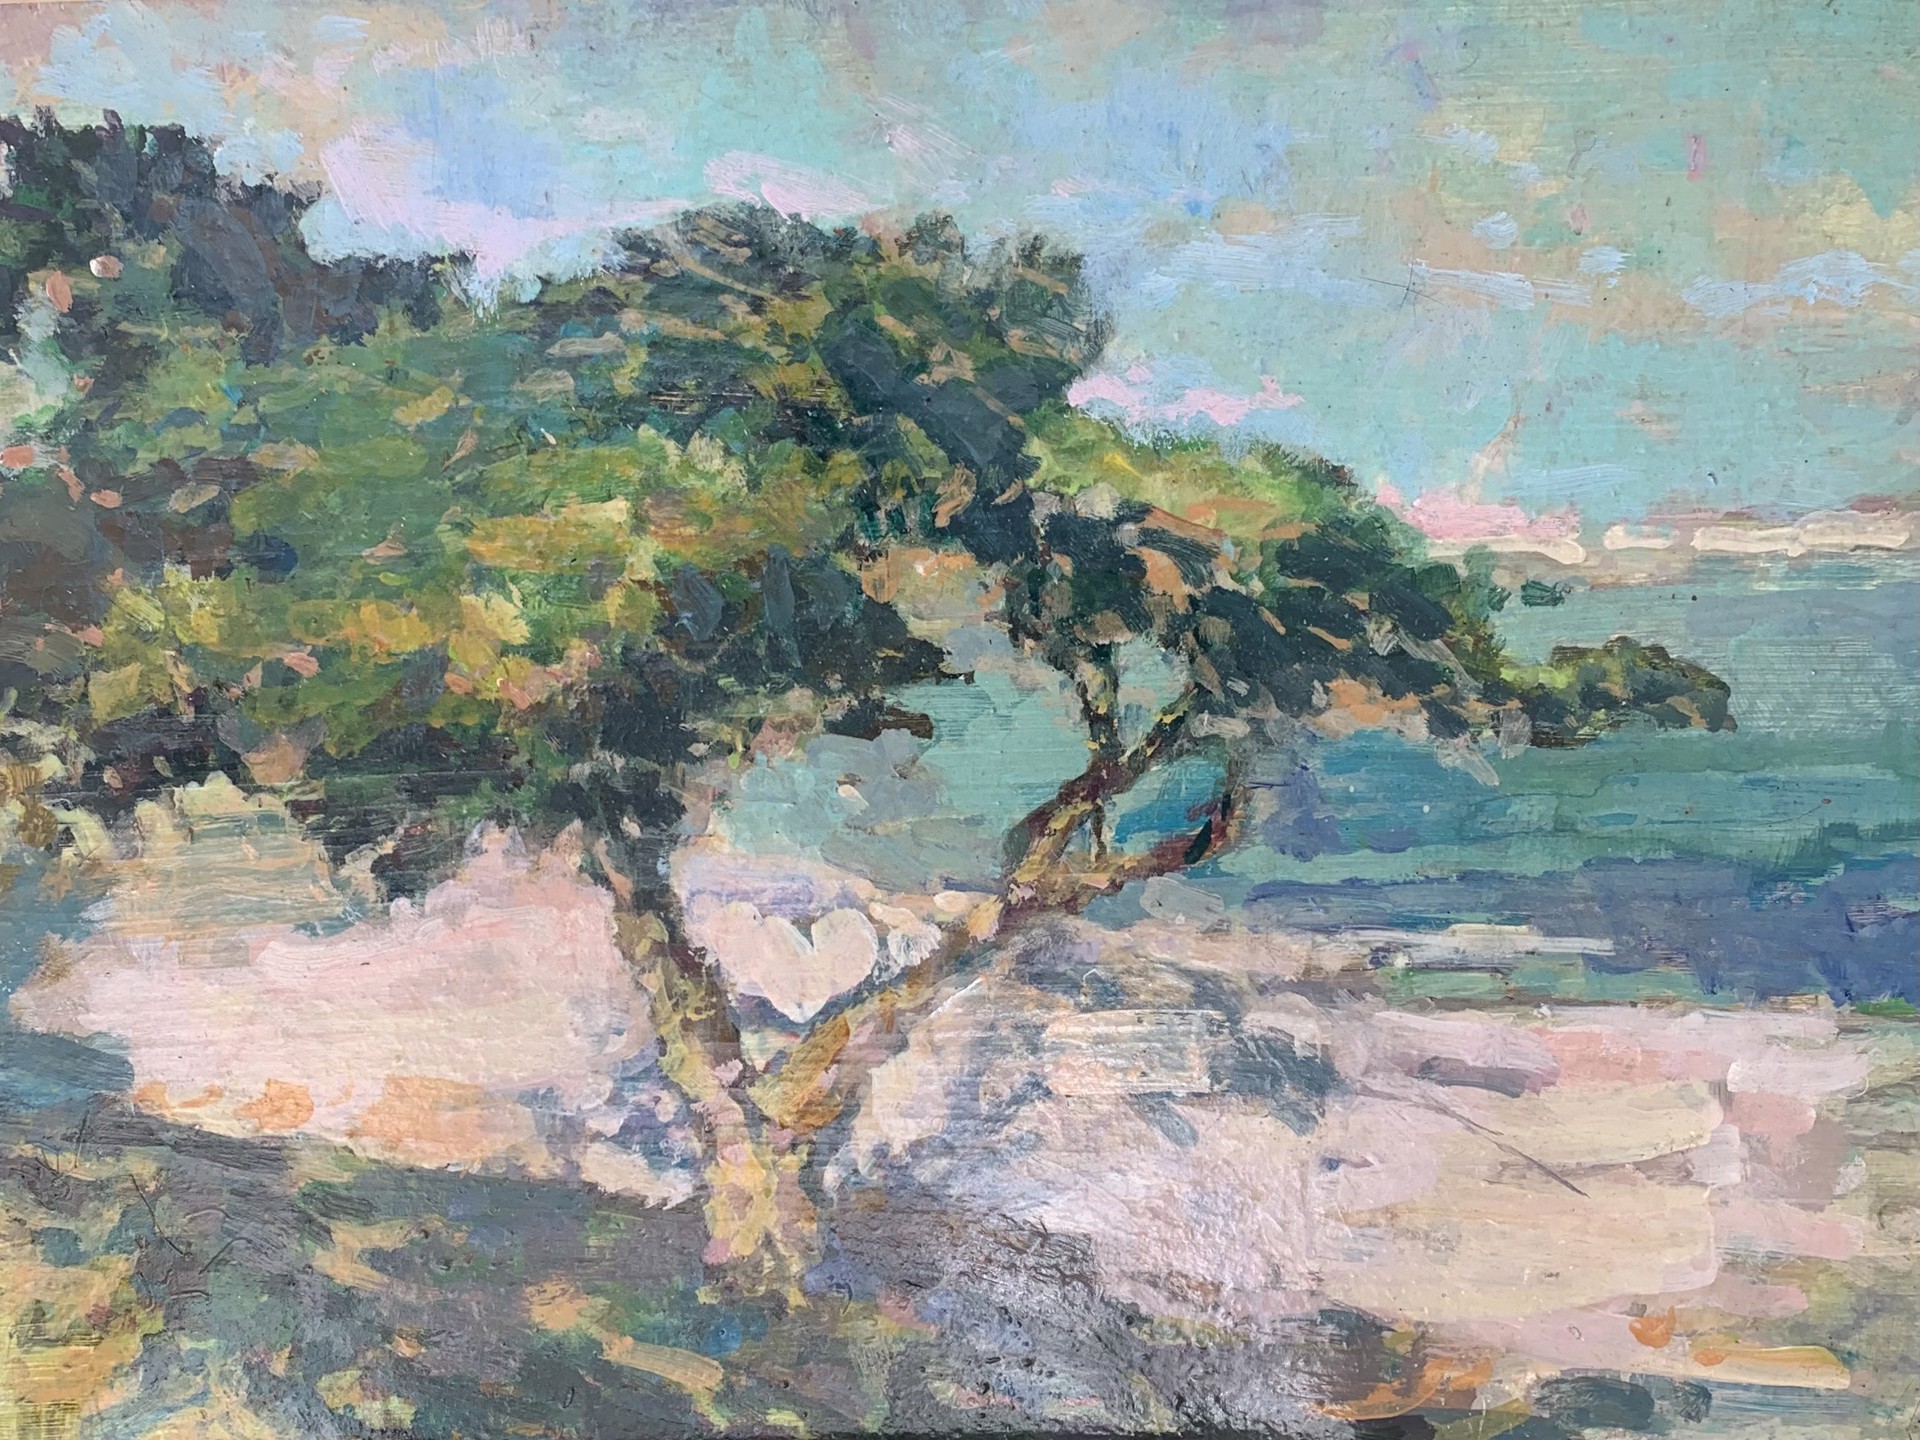 Shepard's Cove Carmel by John Cornfield